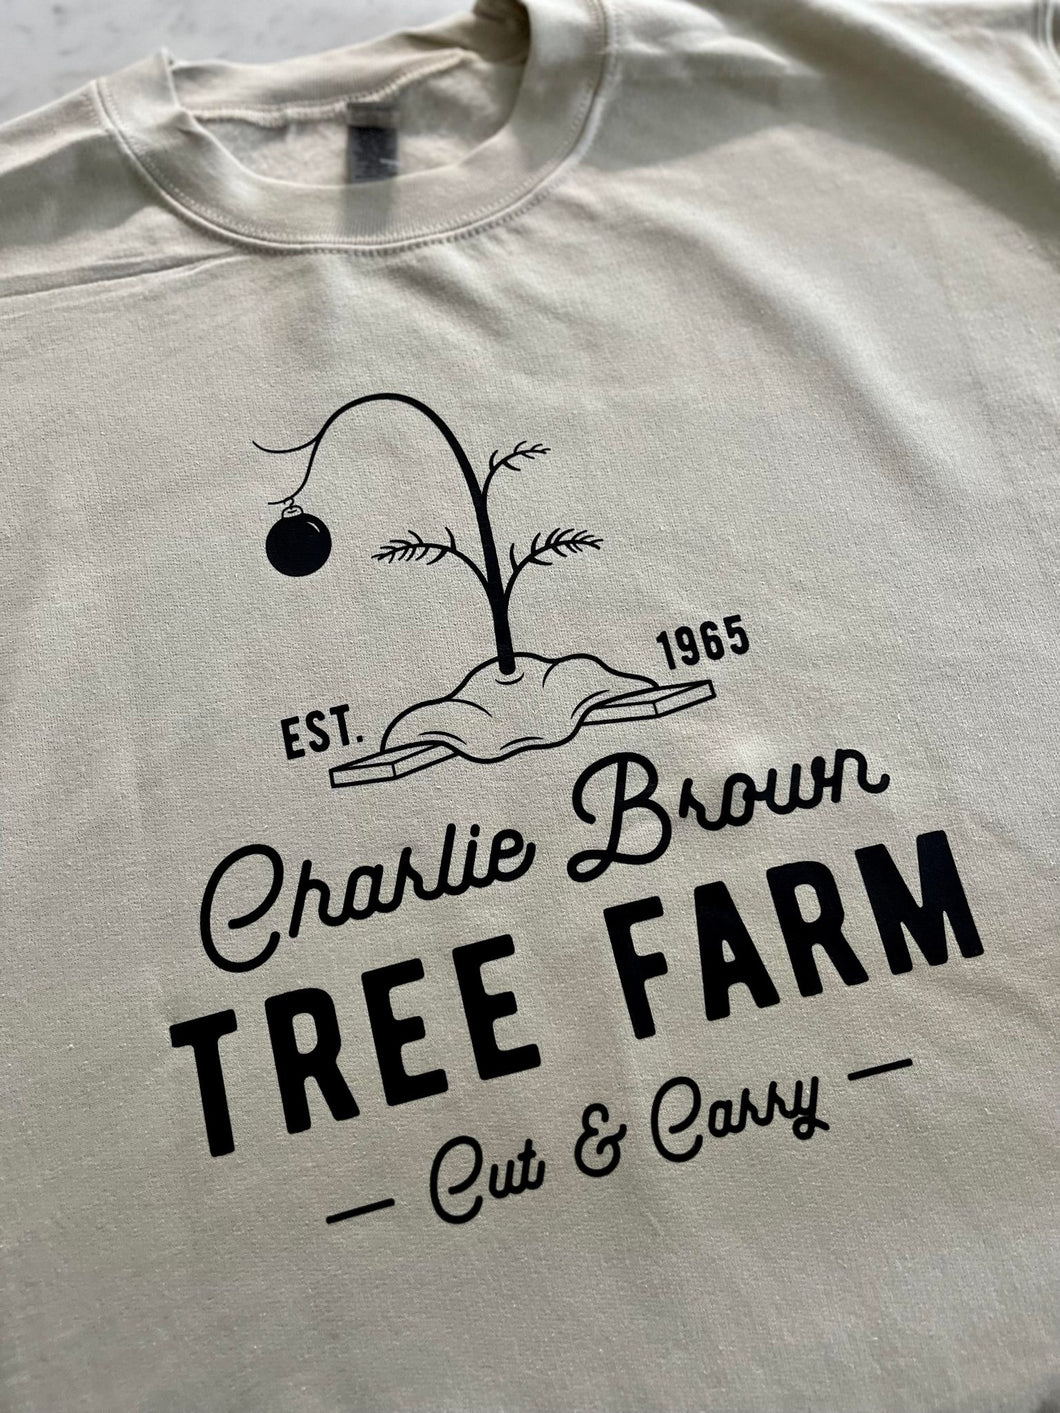 Charlie Brown Tree Farm